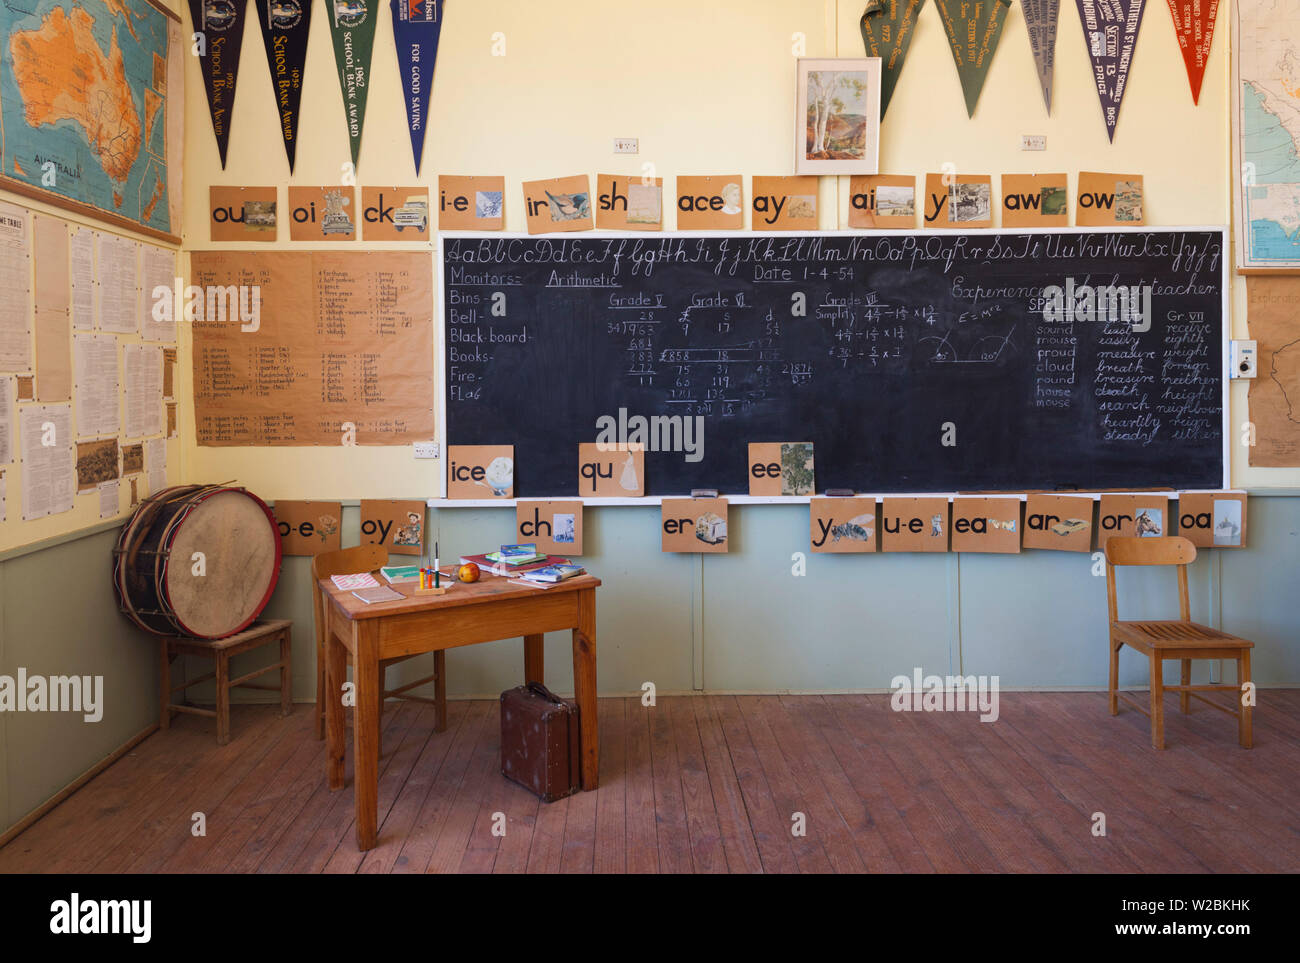 Australien, South Australia, Yorke Peninsula, Kadina, Bauernmuseum Schuppen, eine Schule, Tafel Stockfoto